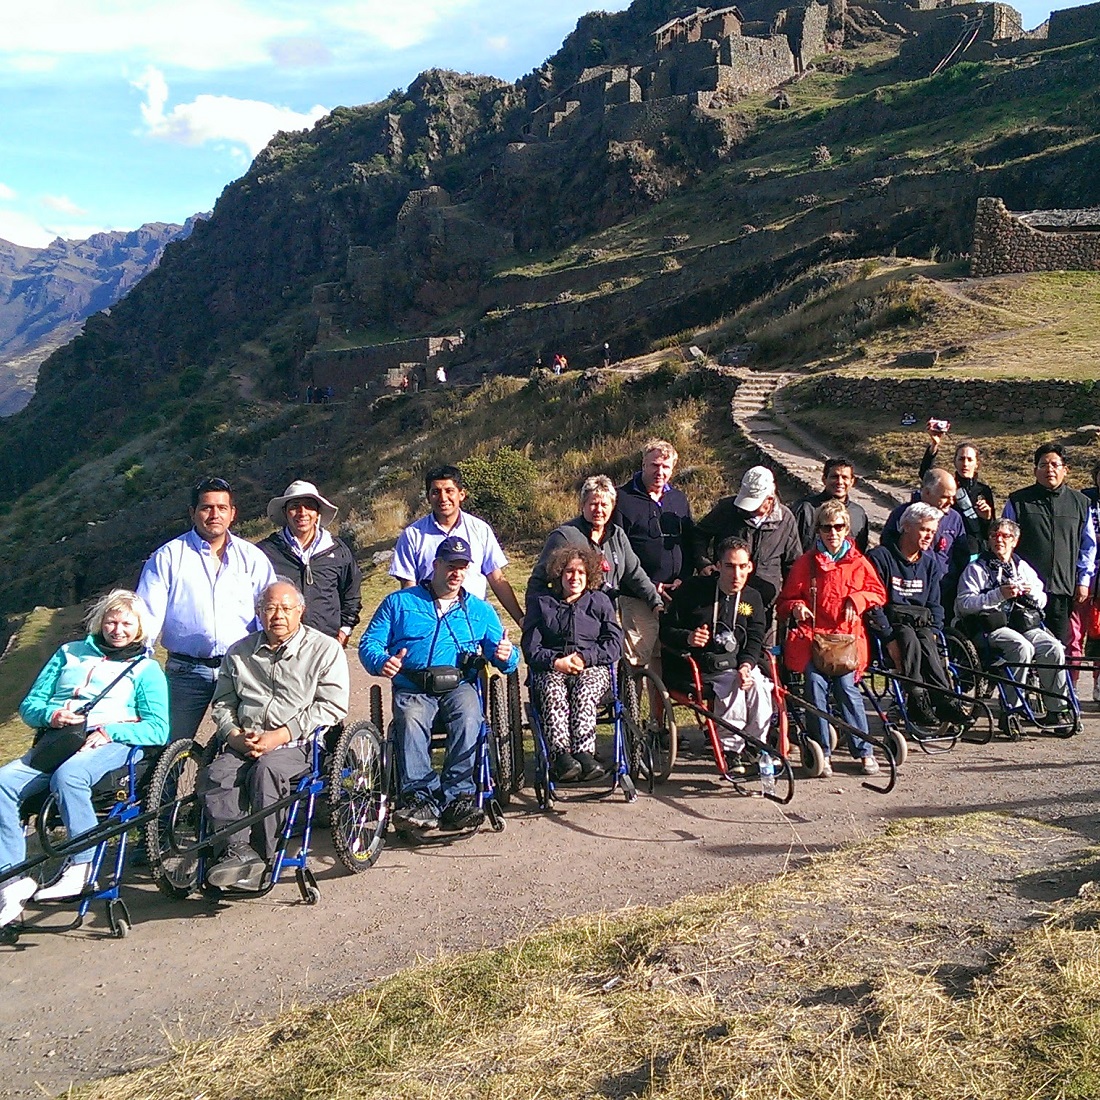 Accessible Peru tour